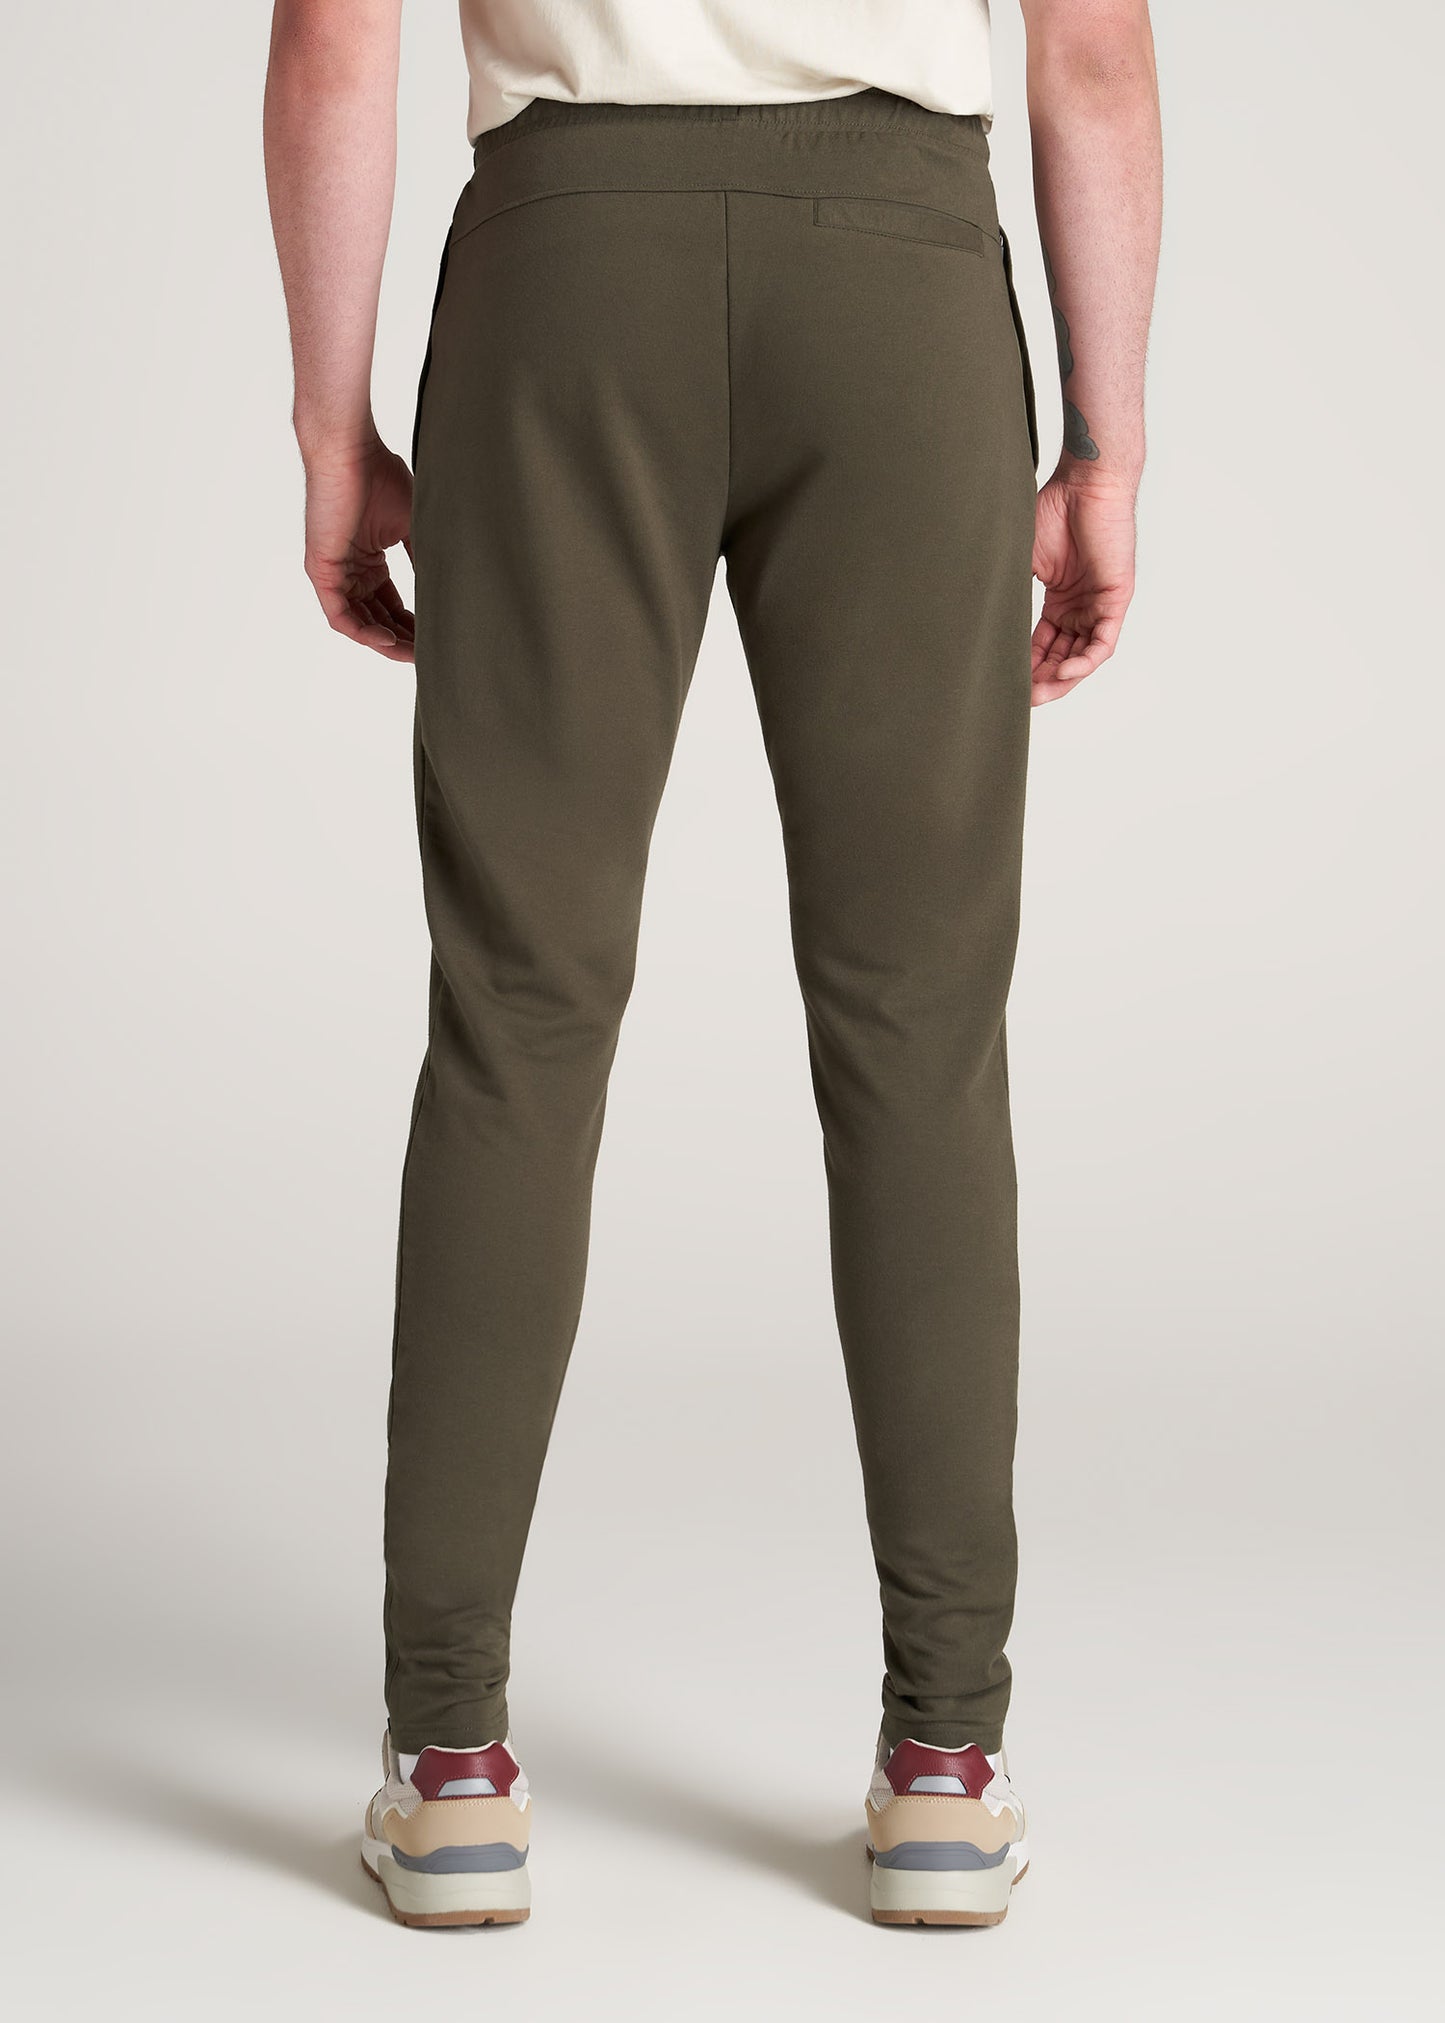 lululemon athletica Camouflage Sweat Pants for Men